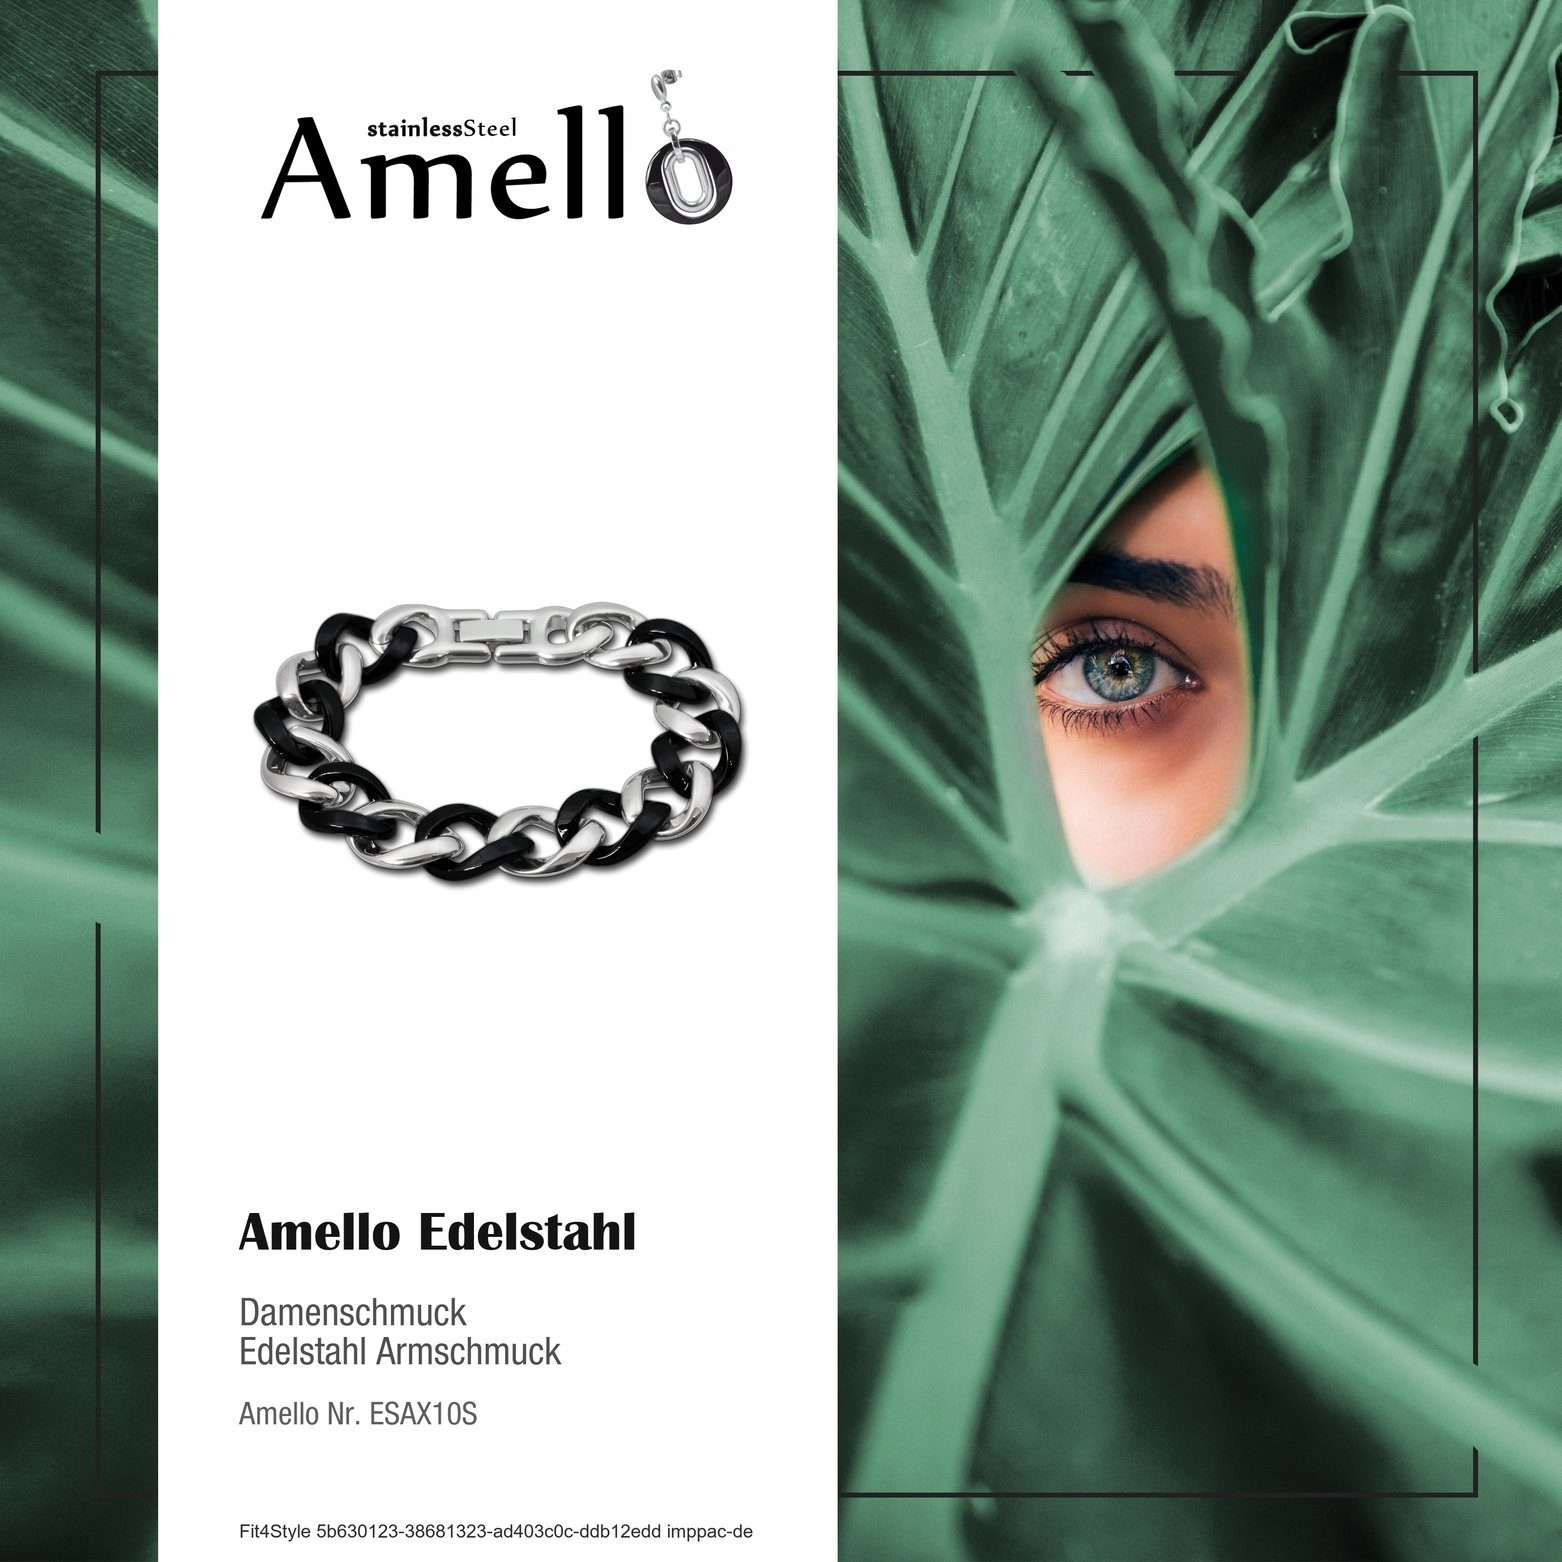 Amello Edelstahlarmband Amello Armbänder Steel) Damen (Stainless Armband Panzer Edelstahl silber für (Armband), schwarz